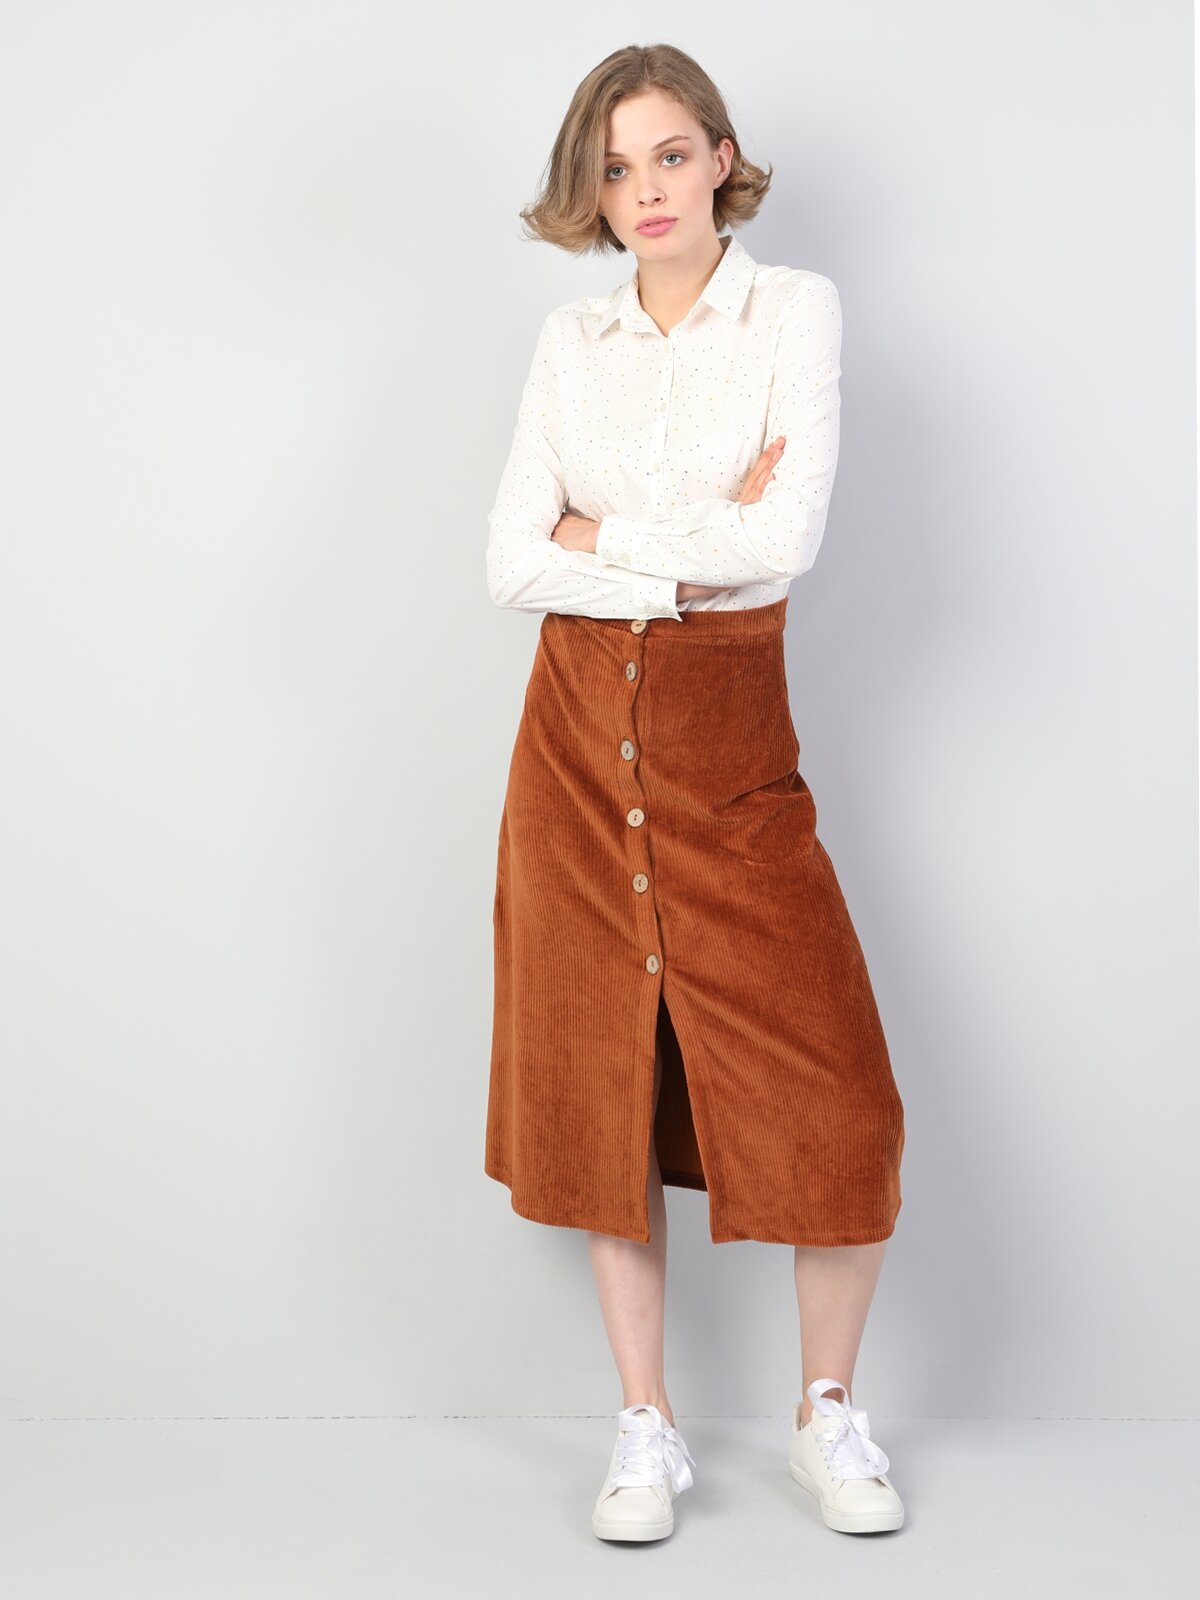 Colins Brown Woman Skirt. 3